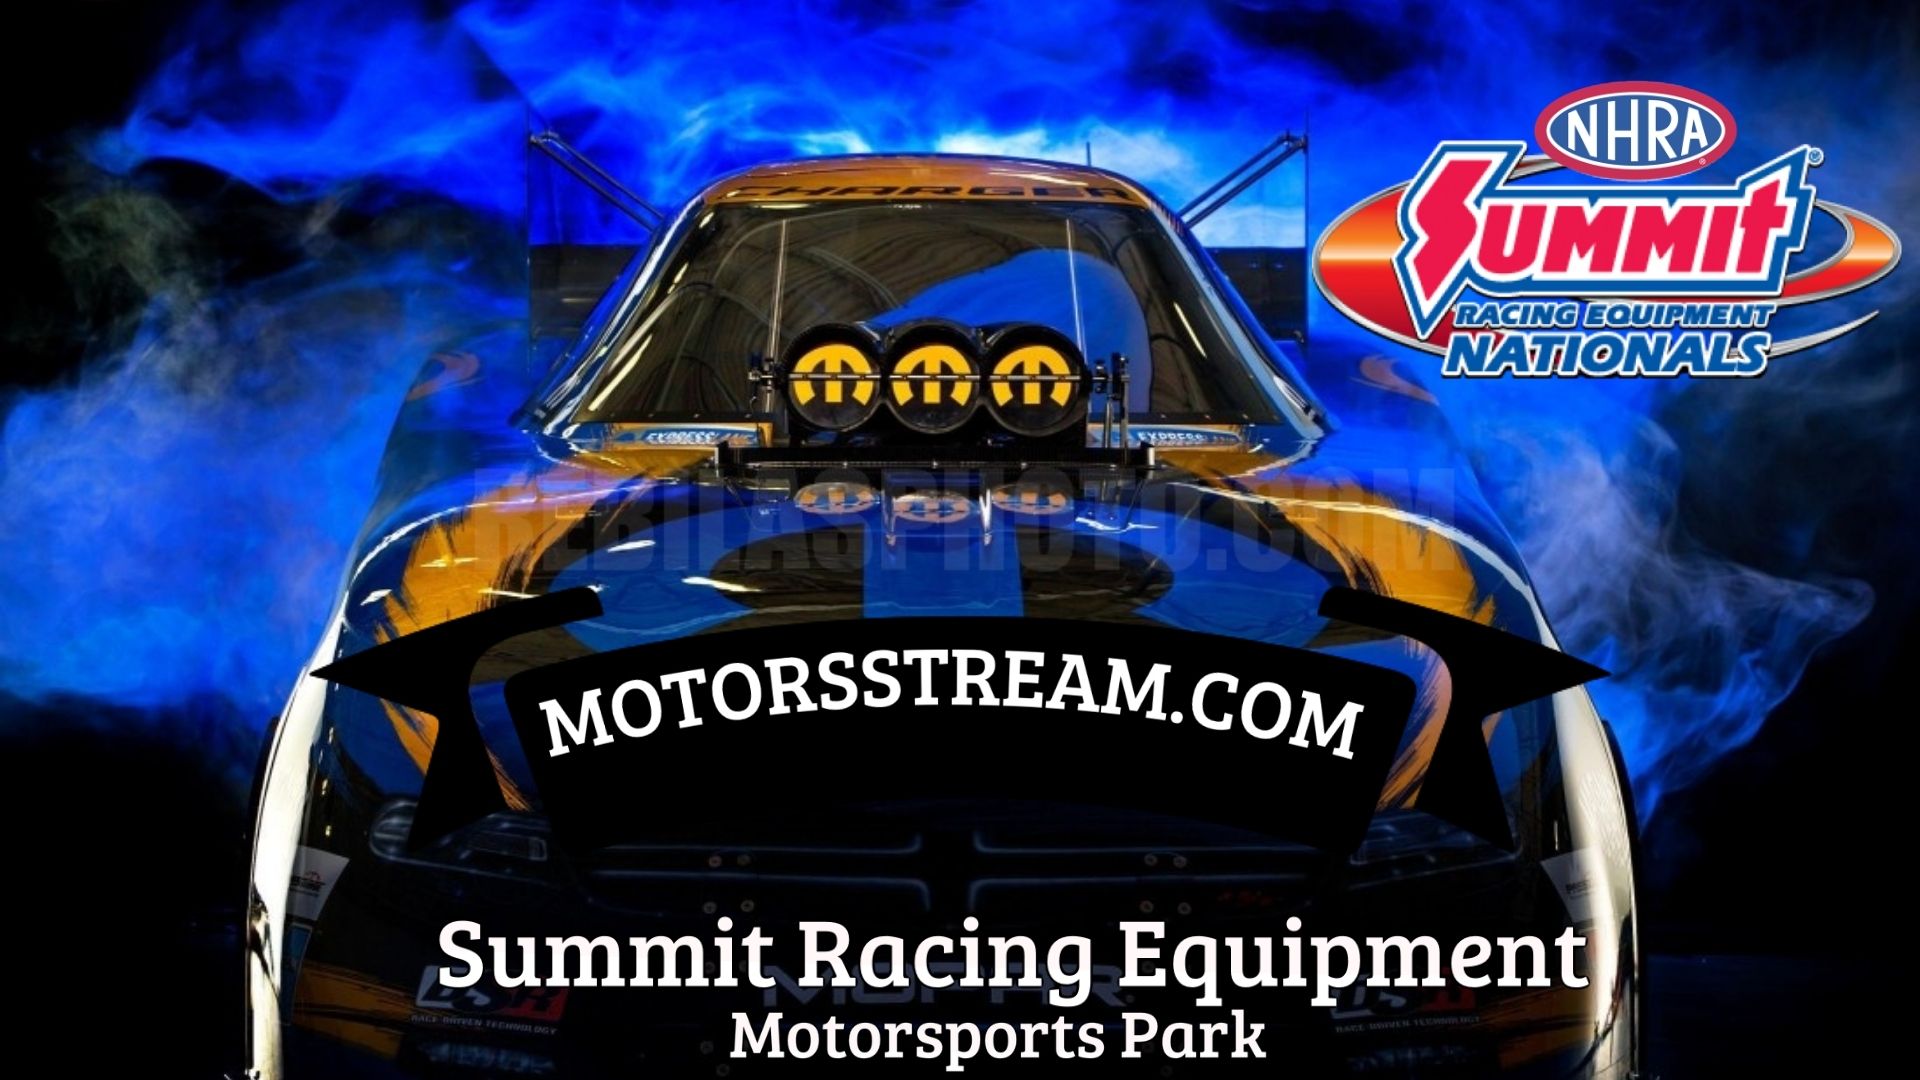 Live Summit Racing Equipment NHRA Nationals Streaming